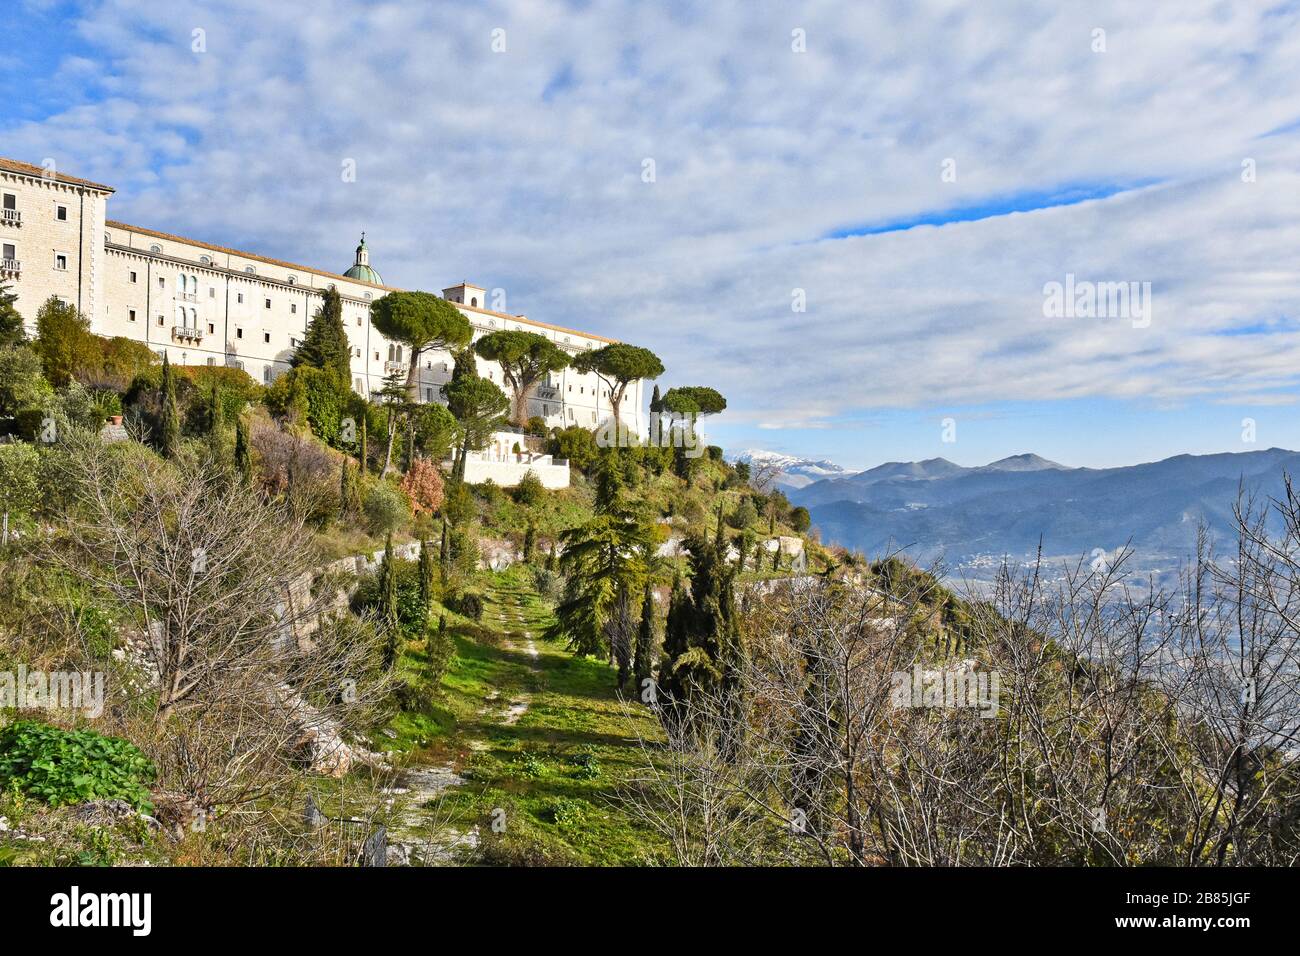 Landscape around the abbey of Monte Cassino, Italy Stock Photo